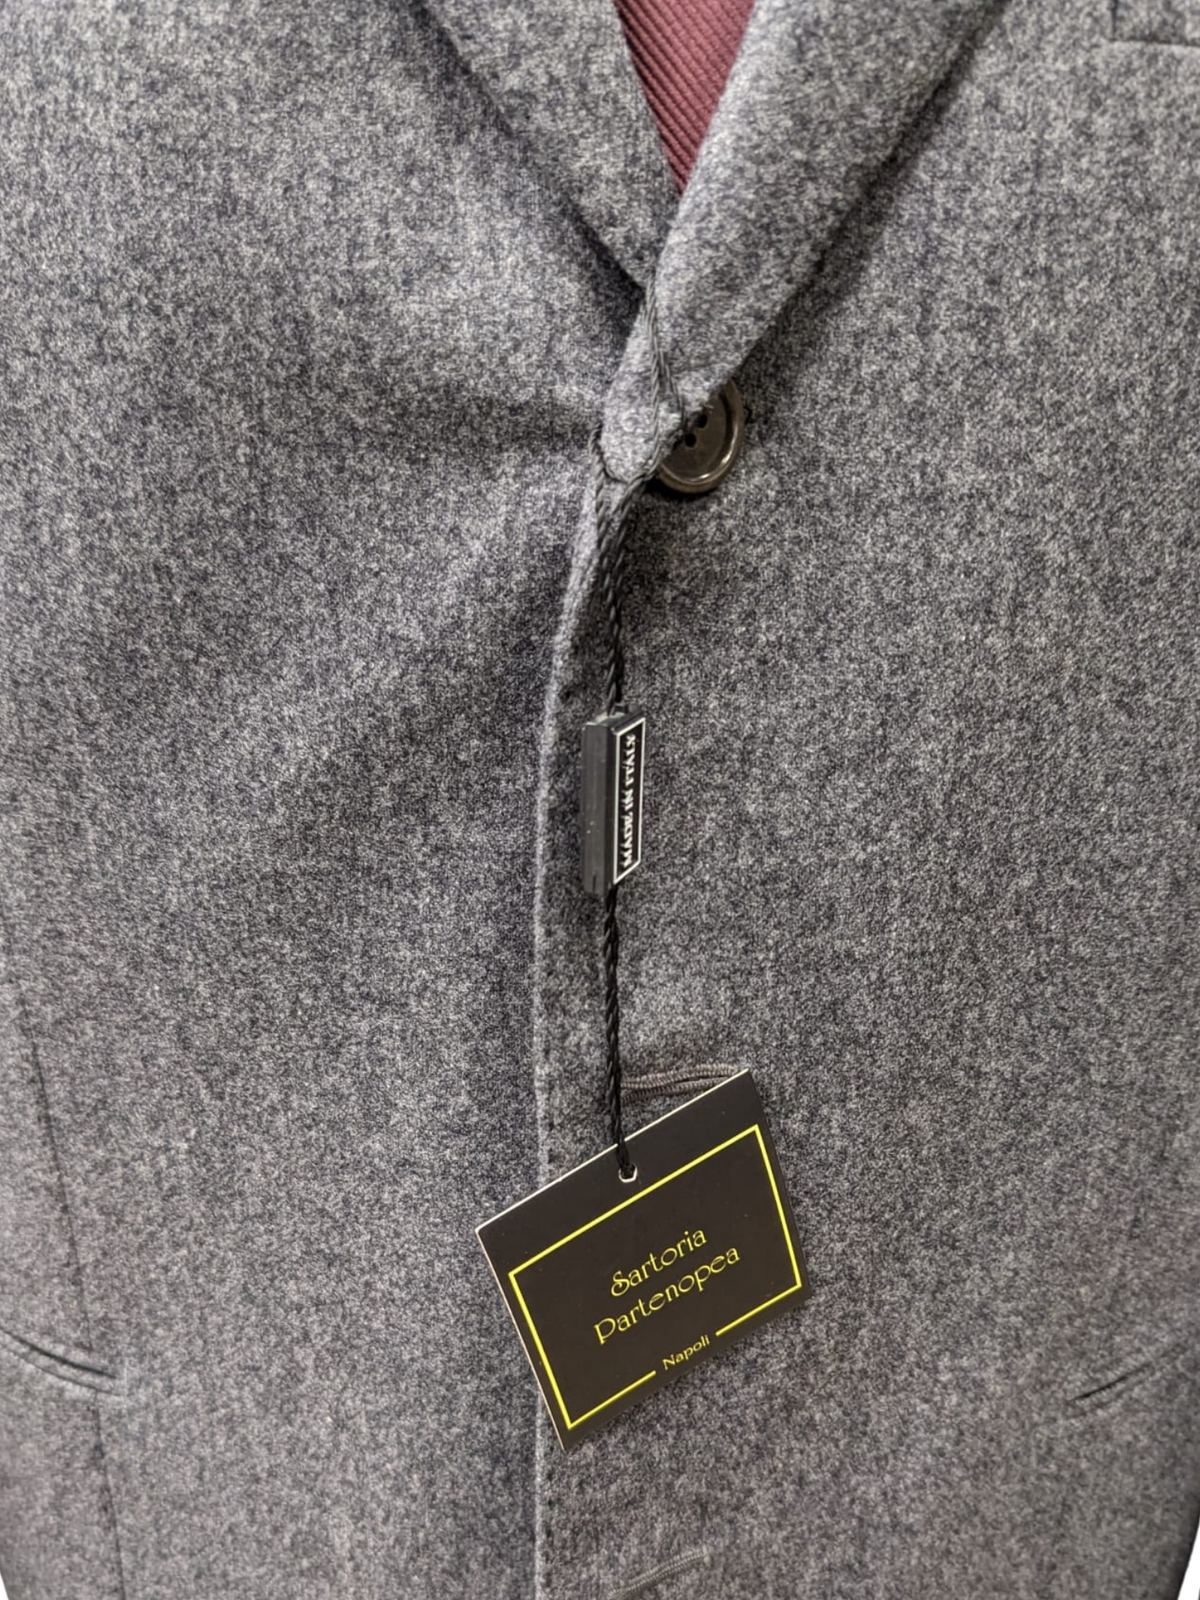 Sartoria Partenopea Mens 40L Solid Gray 100% Wool 3 Button 2 Piece Suit